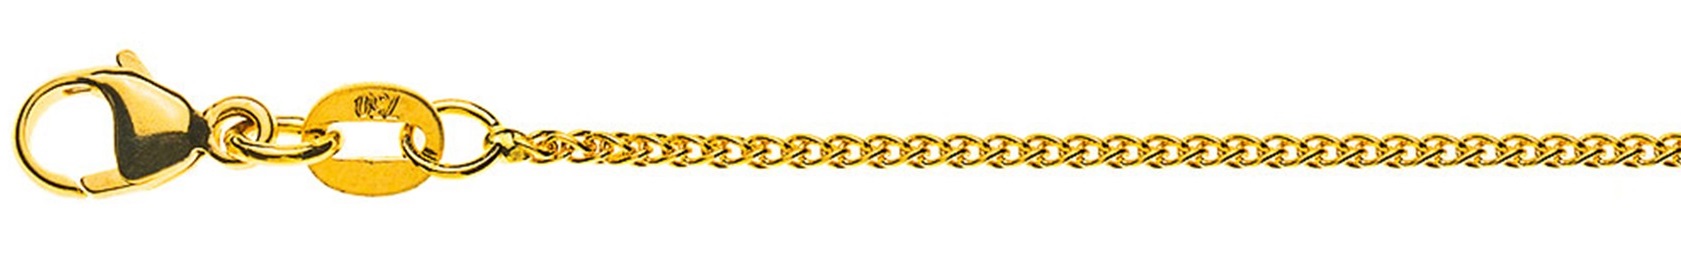 AURONOS Prestige Collier en or jaune 18K torsadé 42cm 1.2mm